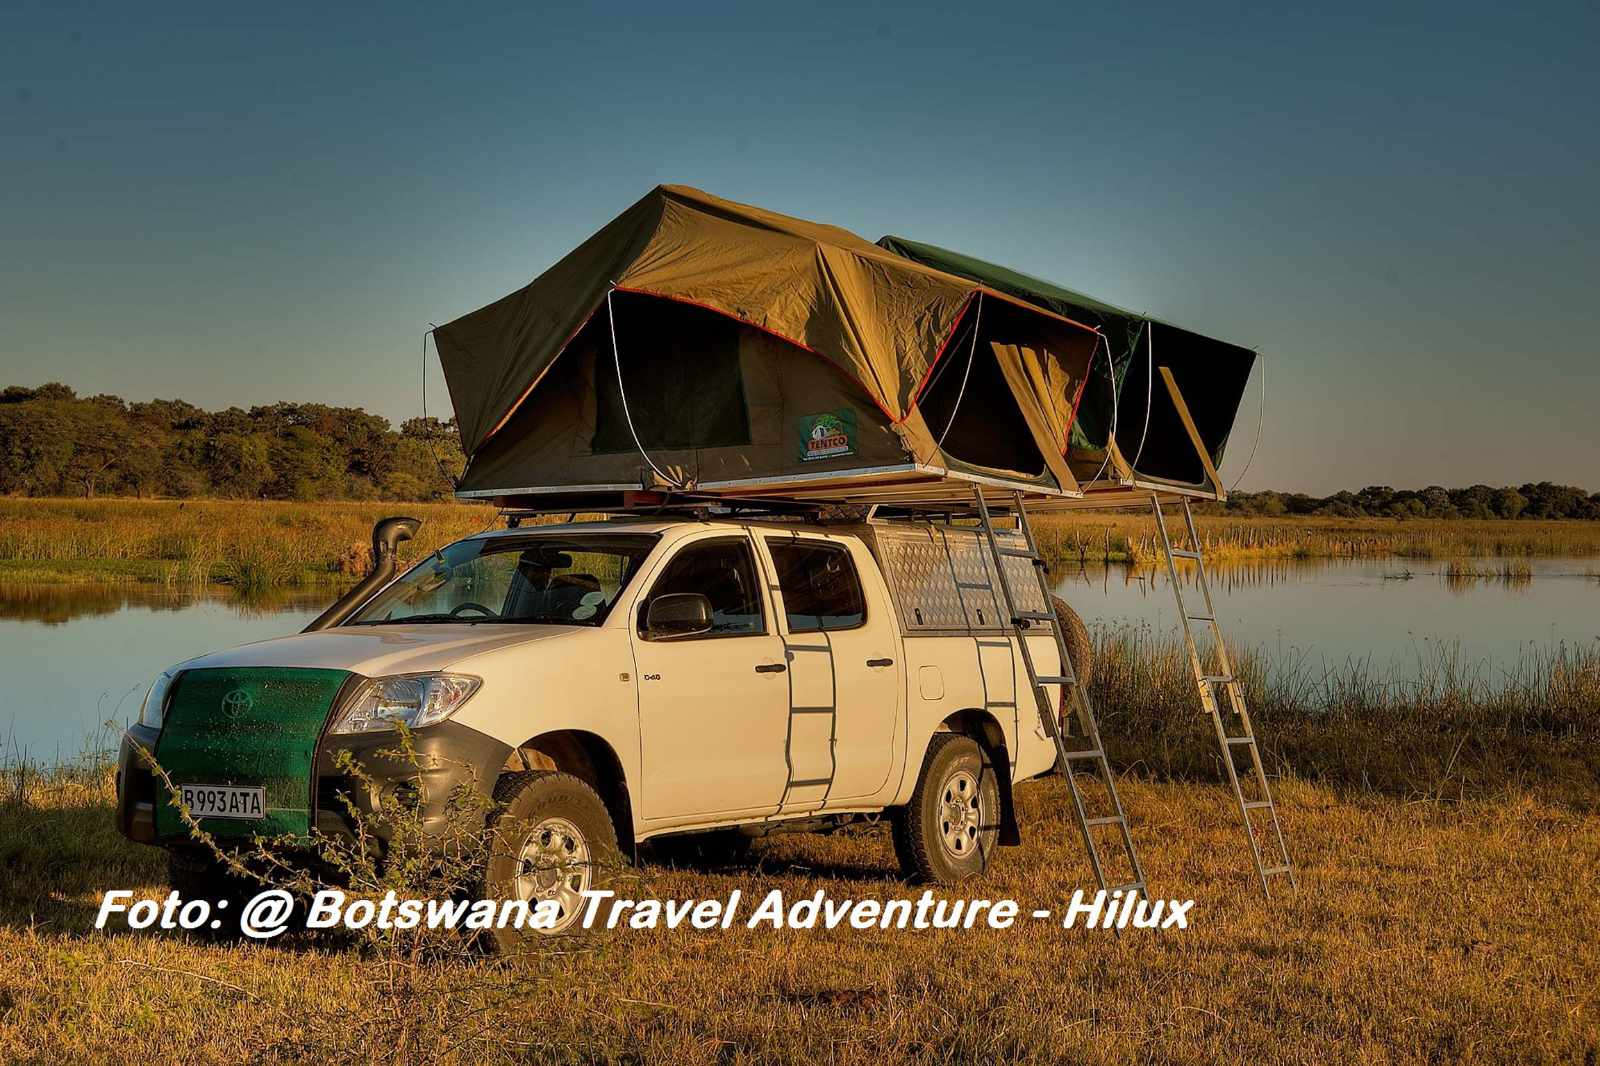 Botswana Toyota Hilux cc. Travel Adventure